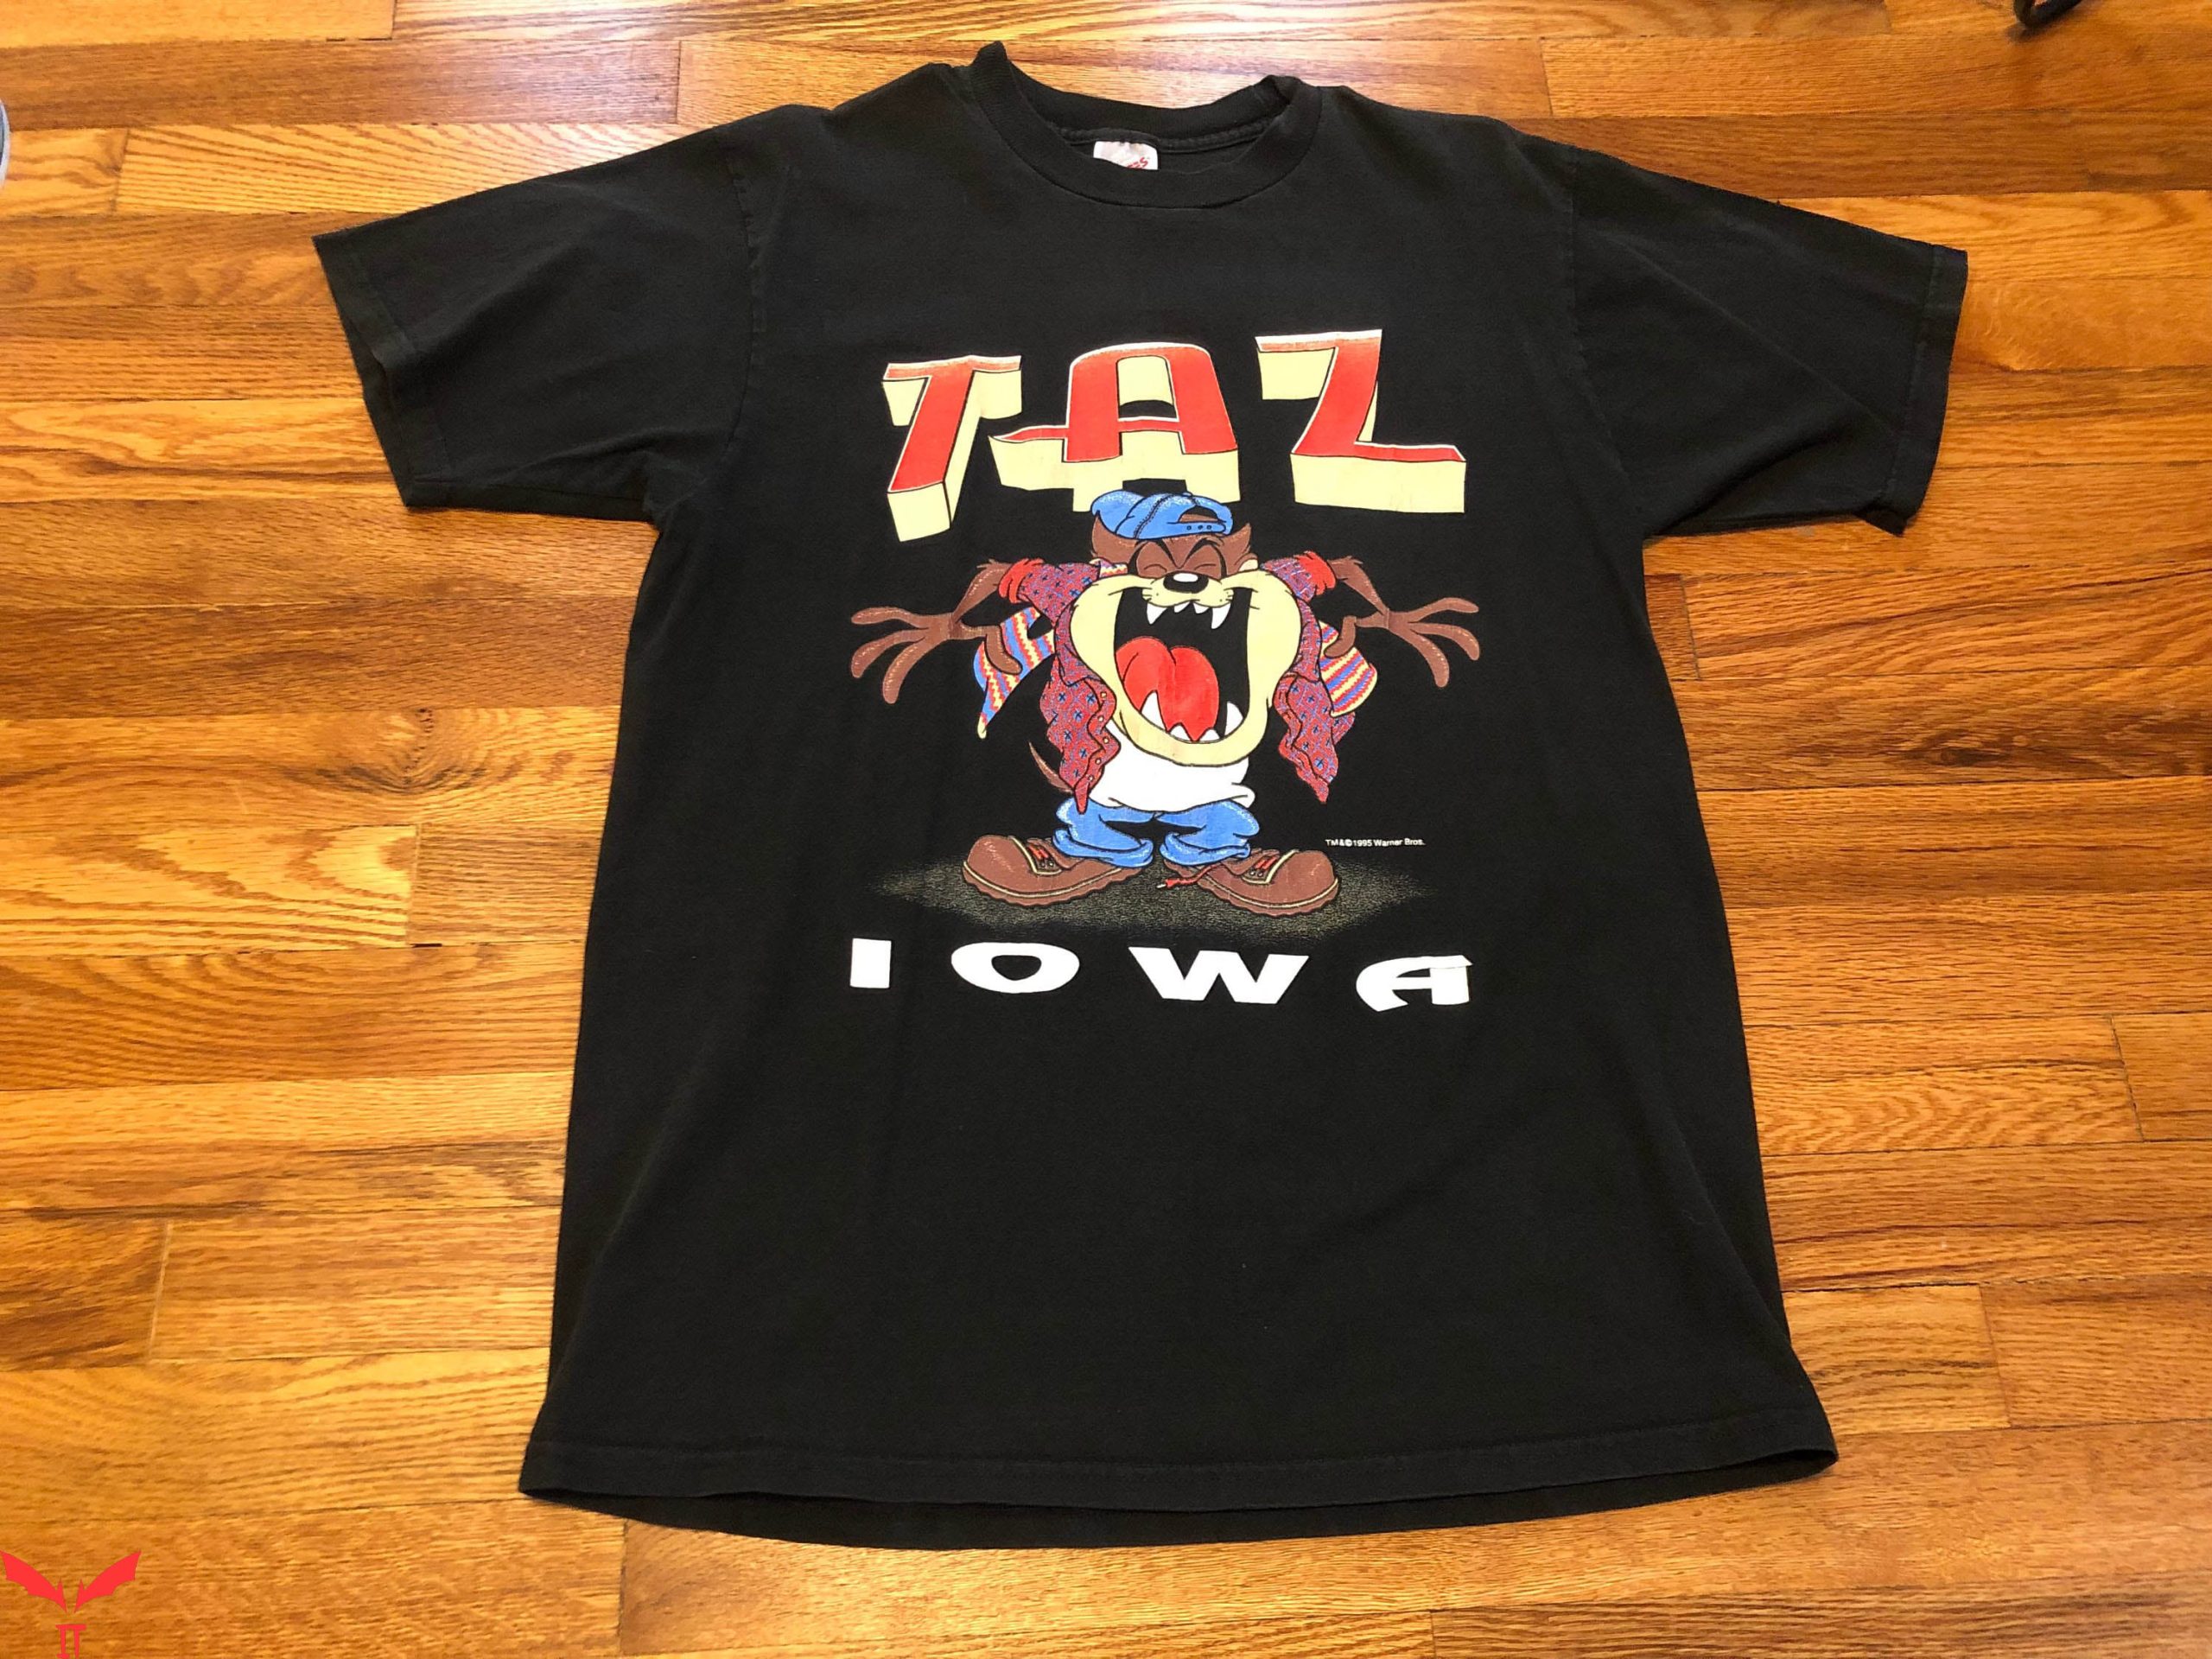 Tasmanian Devil T-Shirt Taz Iowa Looney Tunes Bugs Bunny